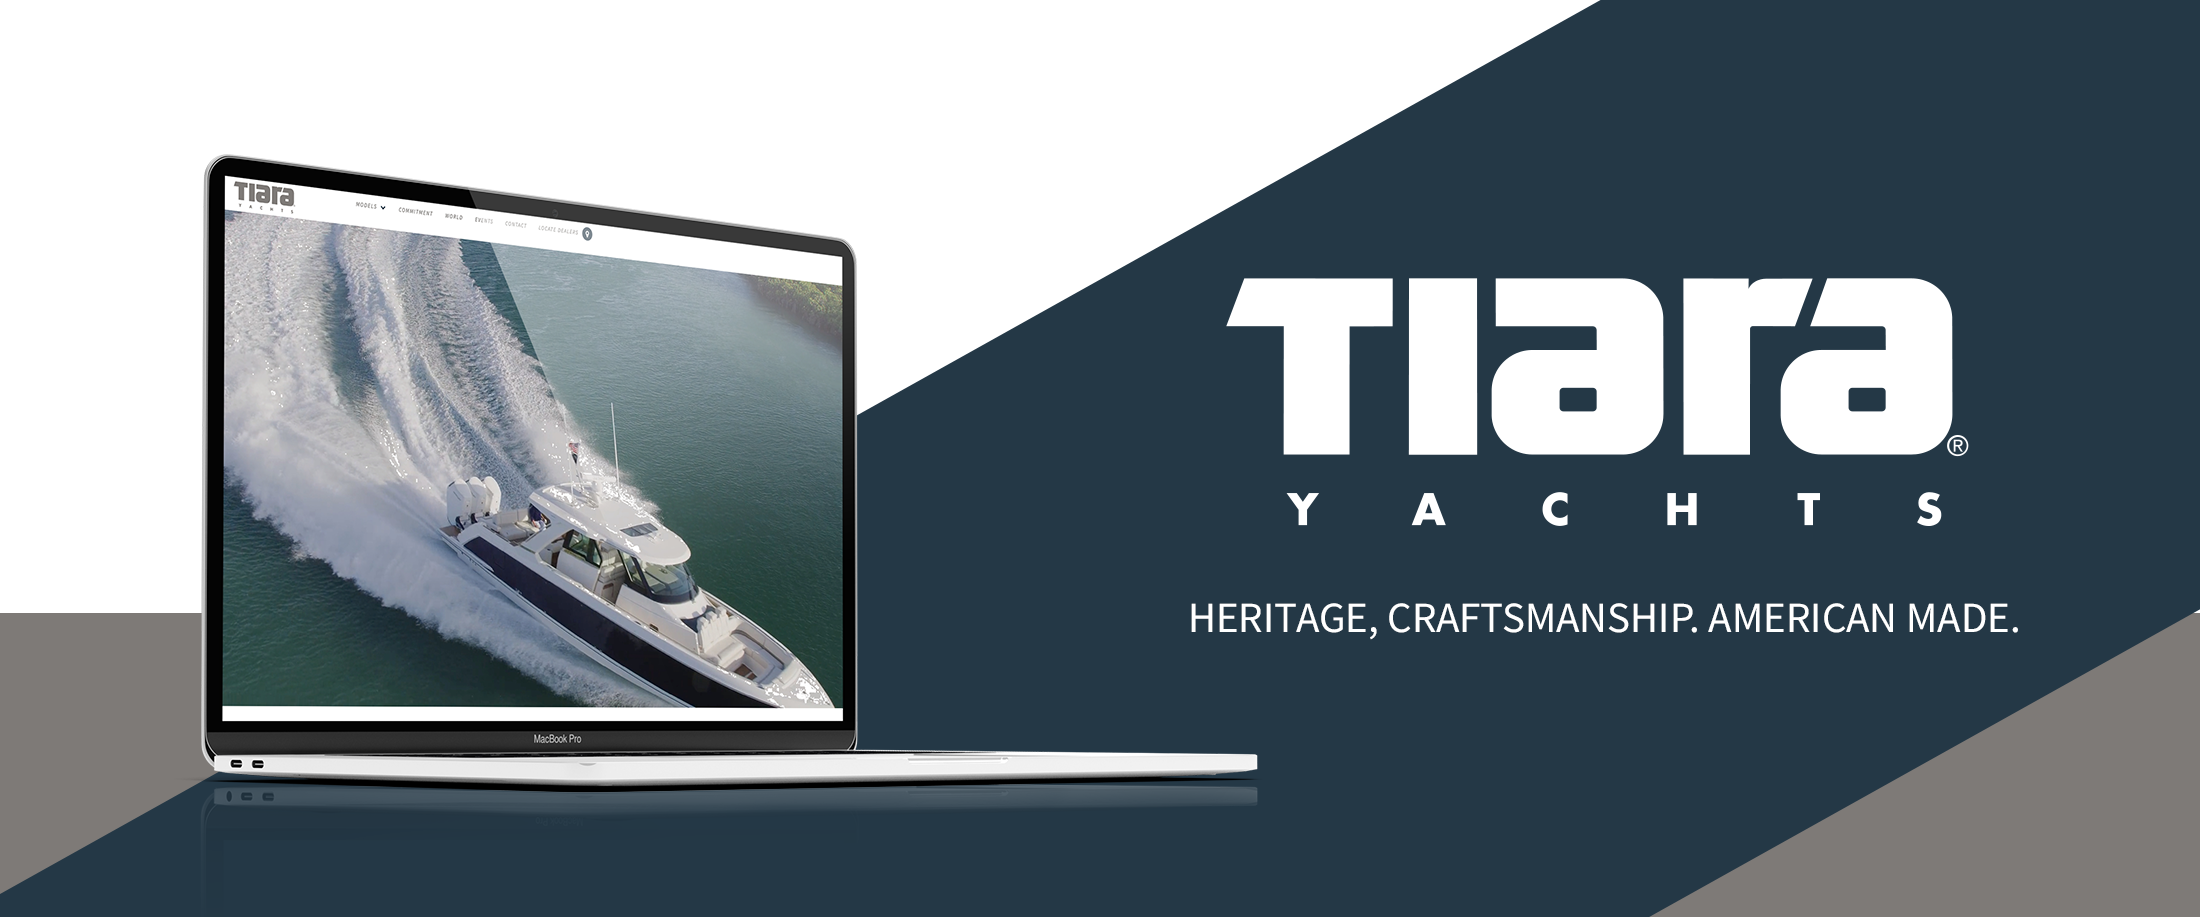 Tiara yachts banner